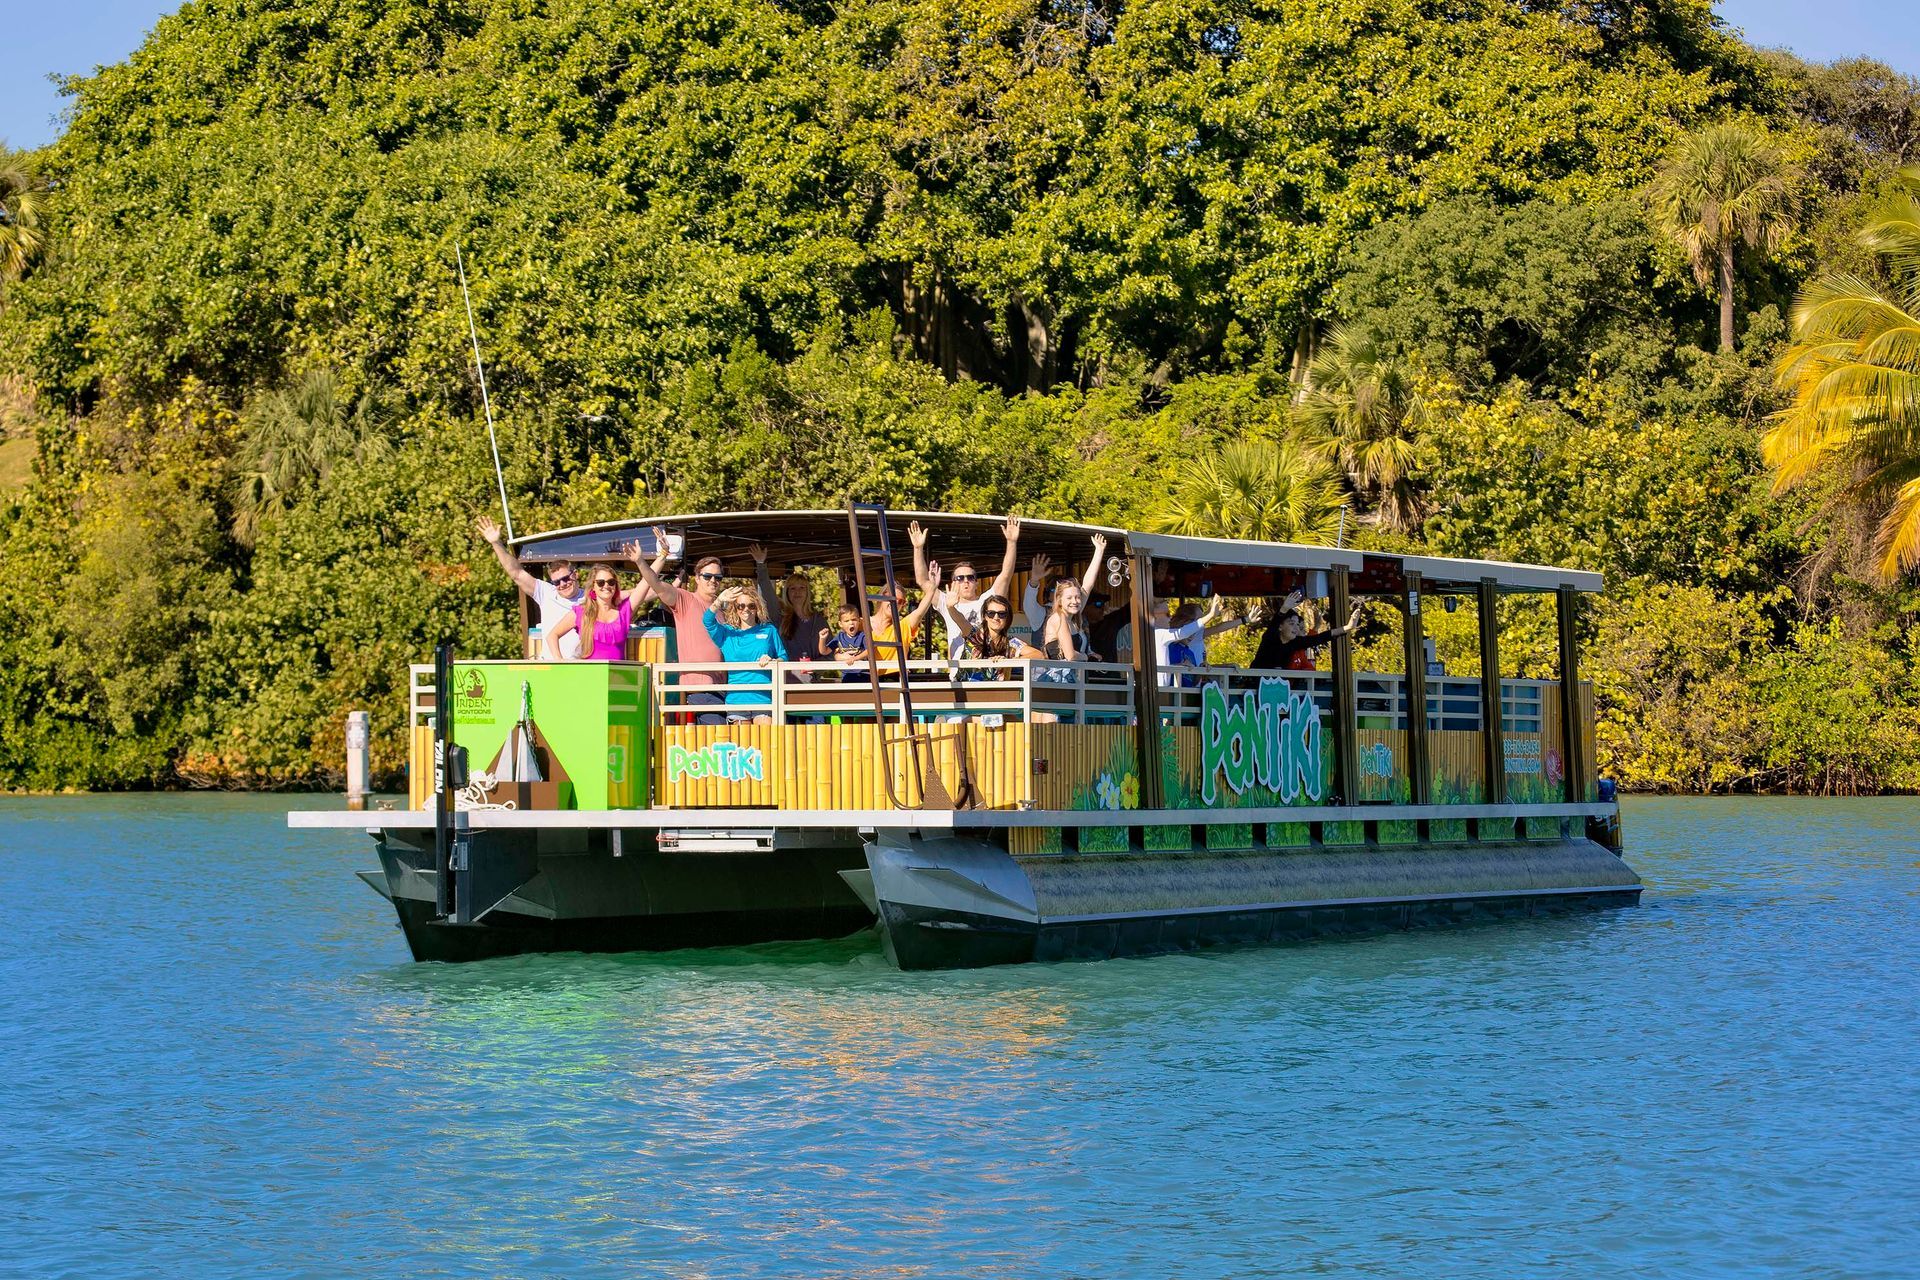 pontiki boat cruises tours